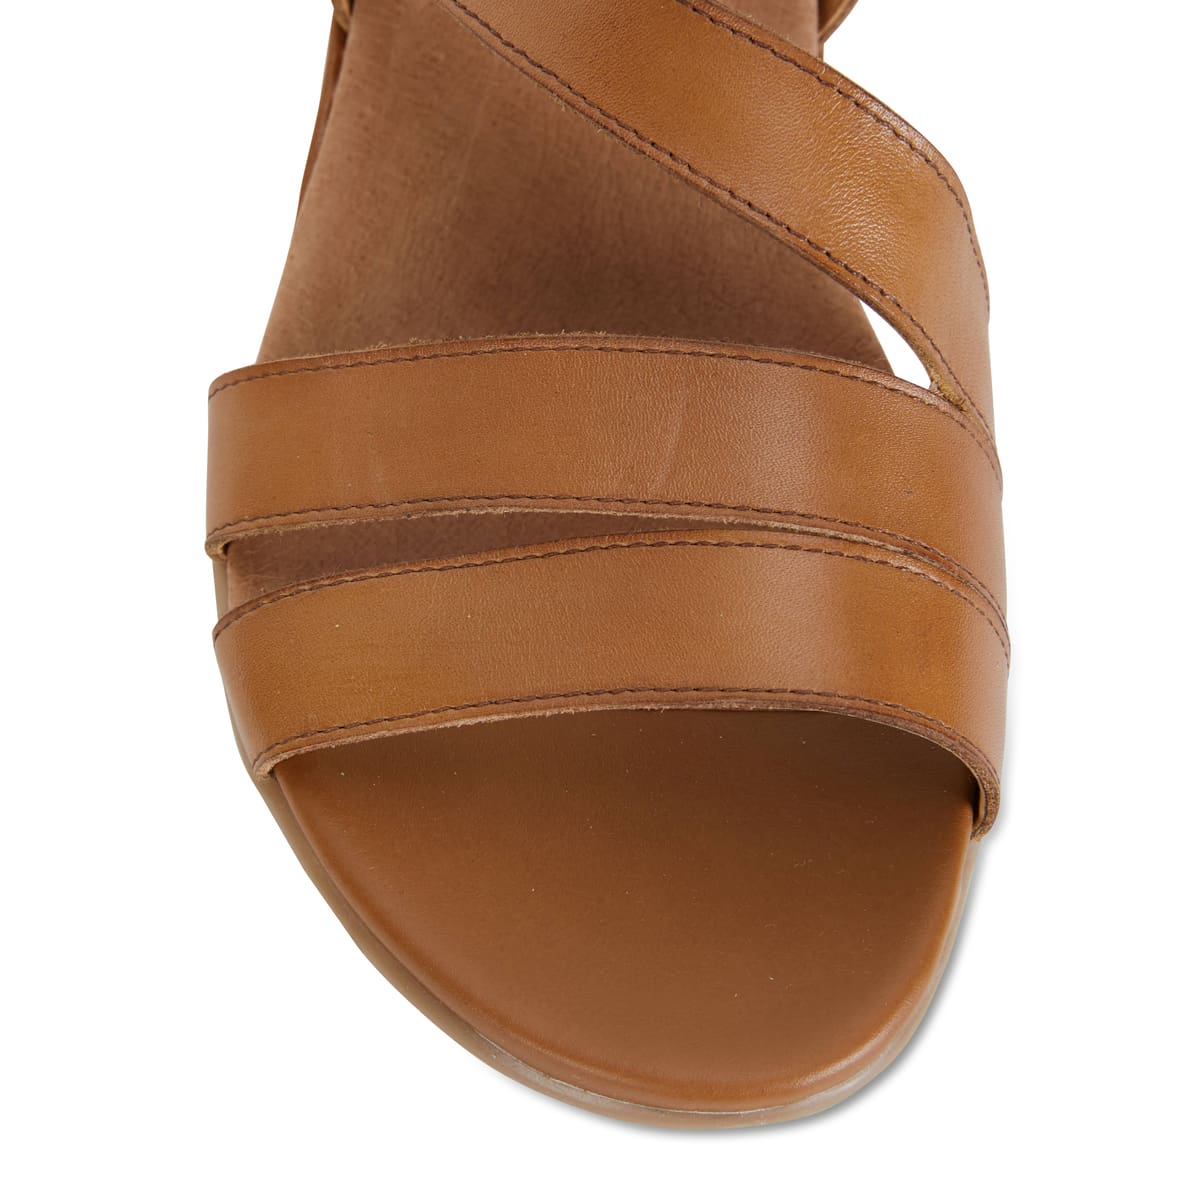 Cisco Sandal in Cognac Leather